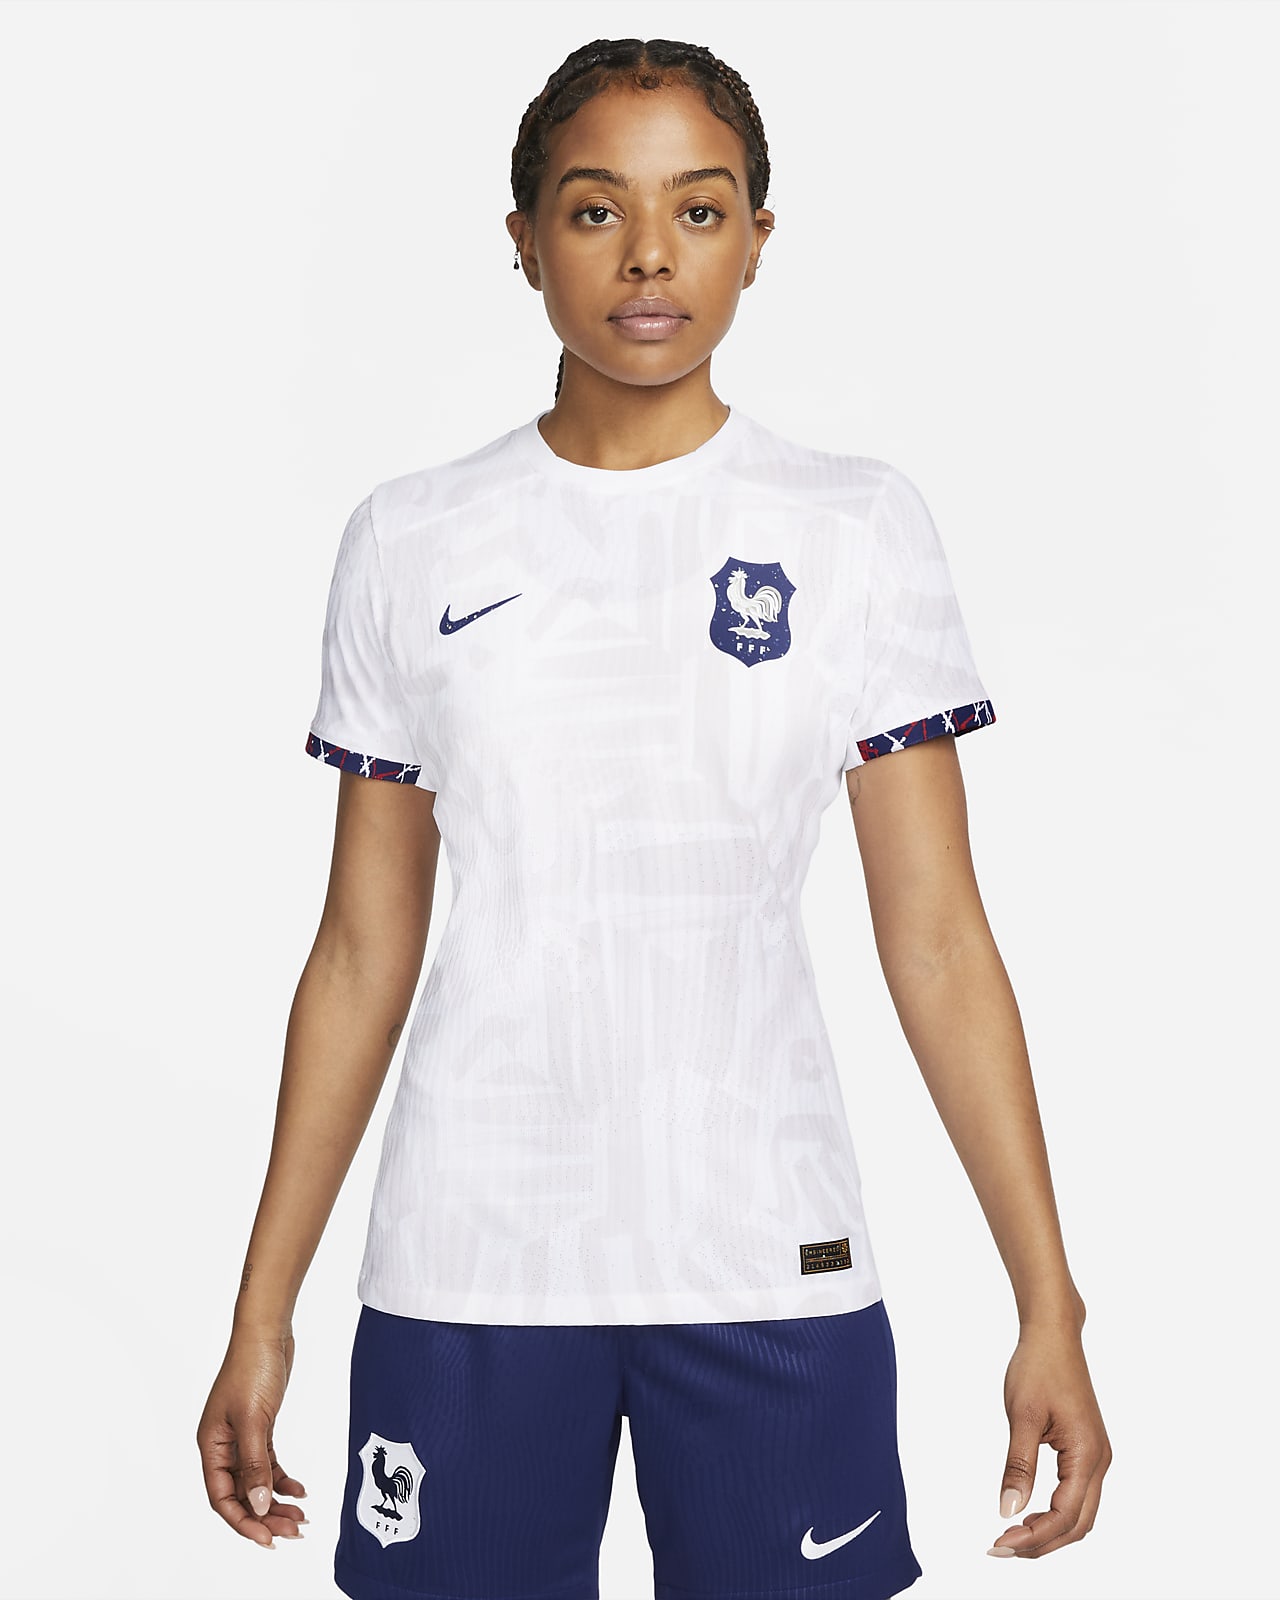 analog kop jorden FFF 2023 Match Away Women's Nike Dri-FIT ADV Football Shirt. Nike LU